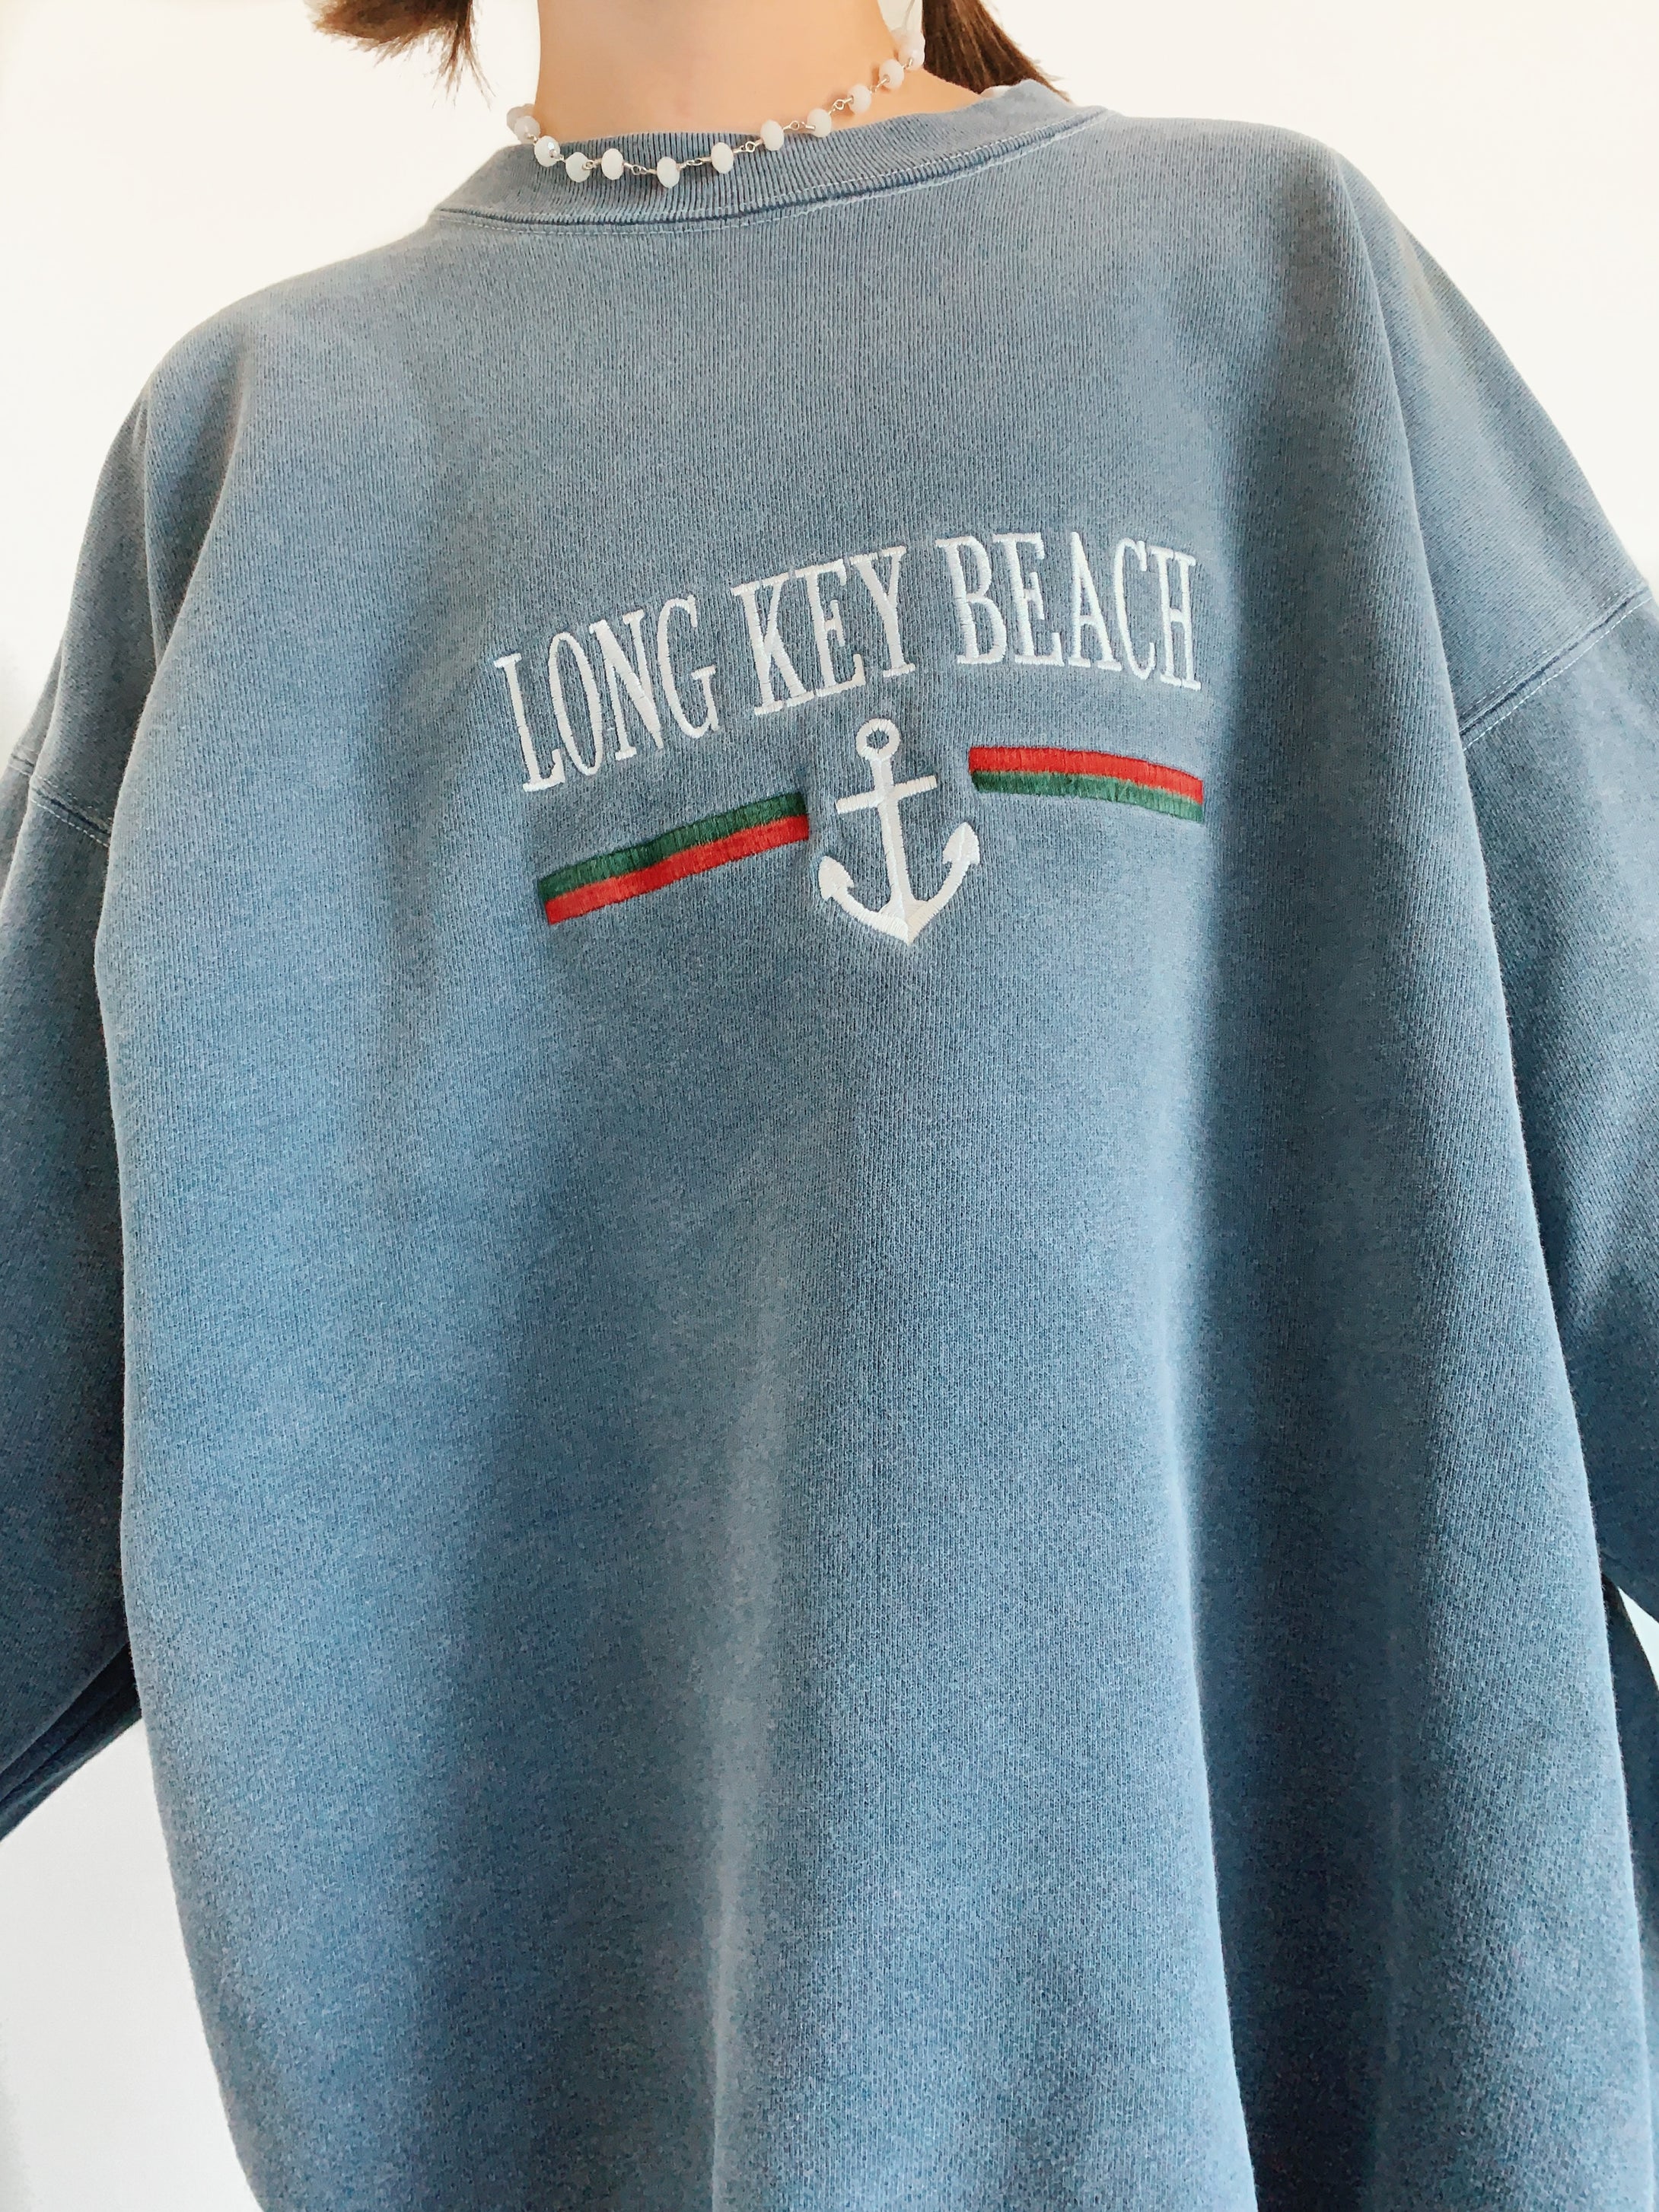 Long Key Beach crewneck